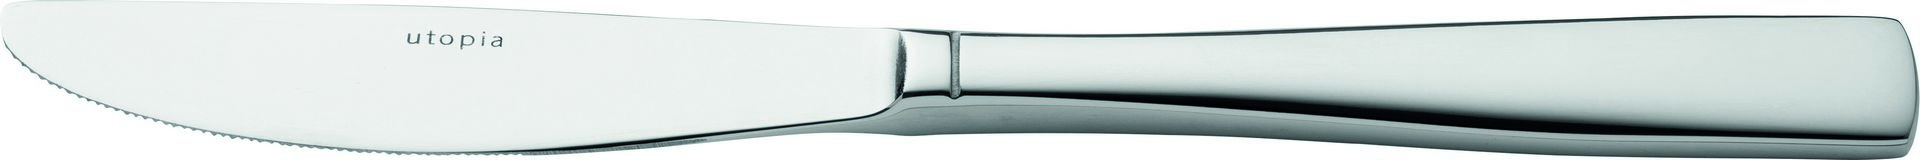 Strauss Dessert Knife - F39002-000000-B01012 (Pack of 12)